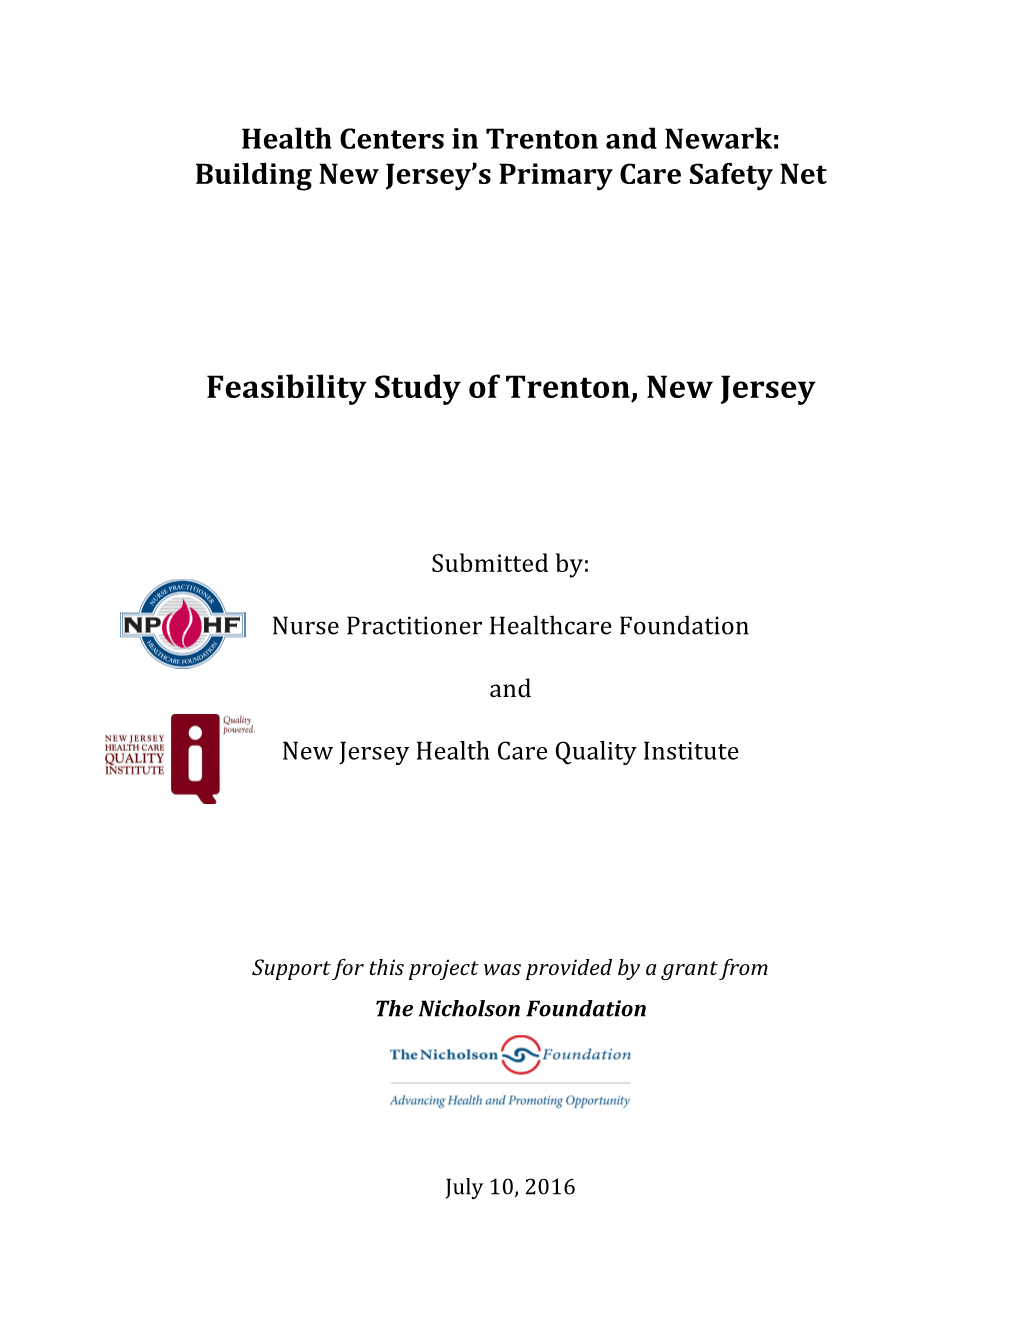 Feasibility Study of Trenton, New Jersey